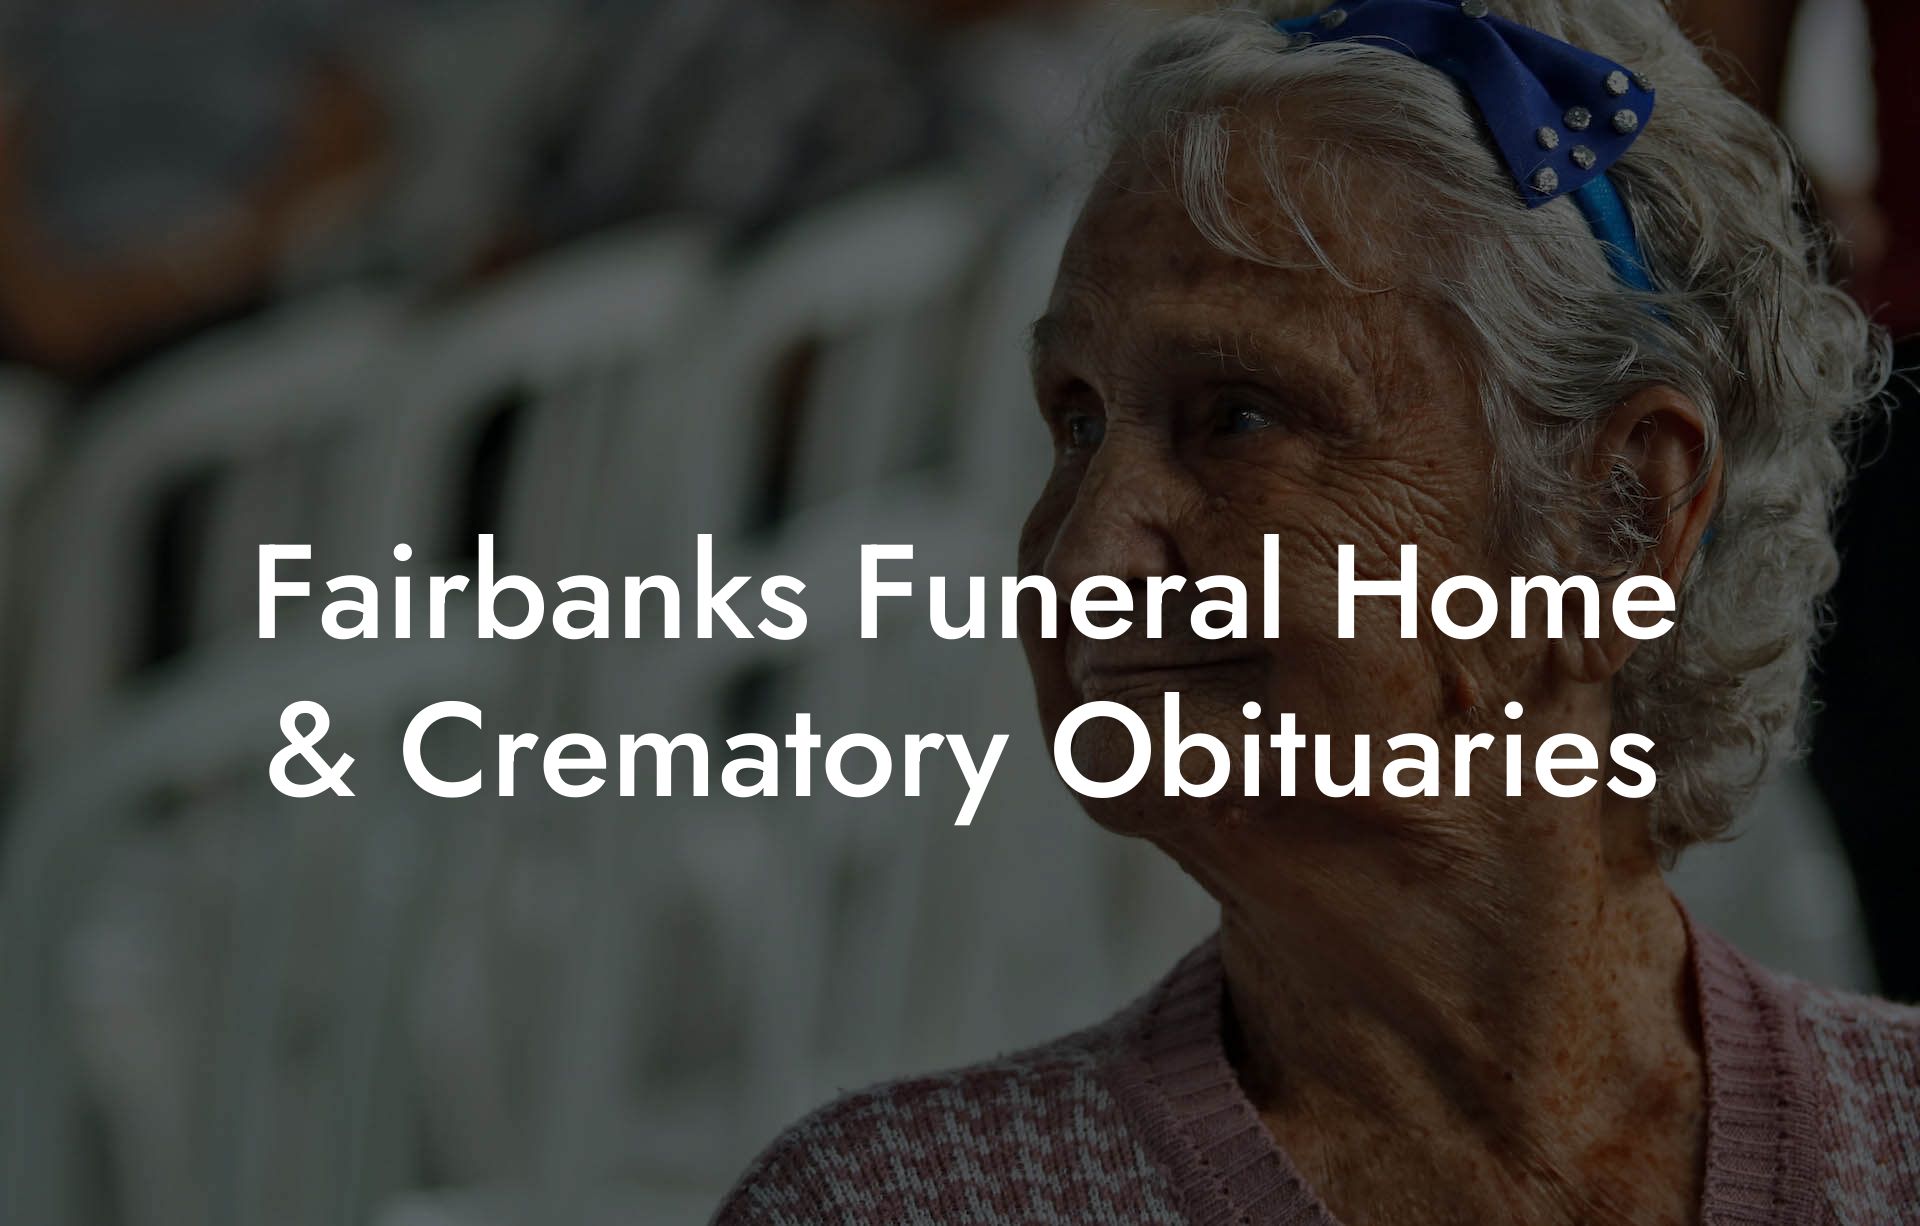 Fairbanks Funeral Home & Crematory Obituaries